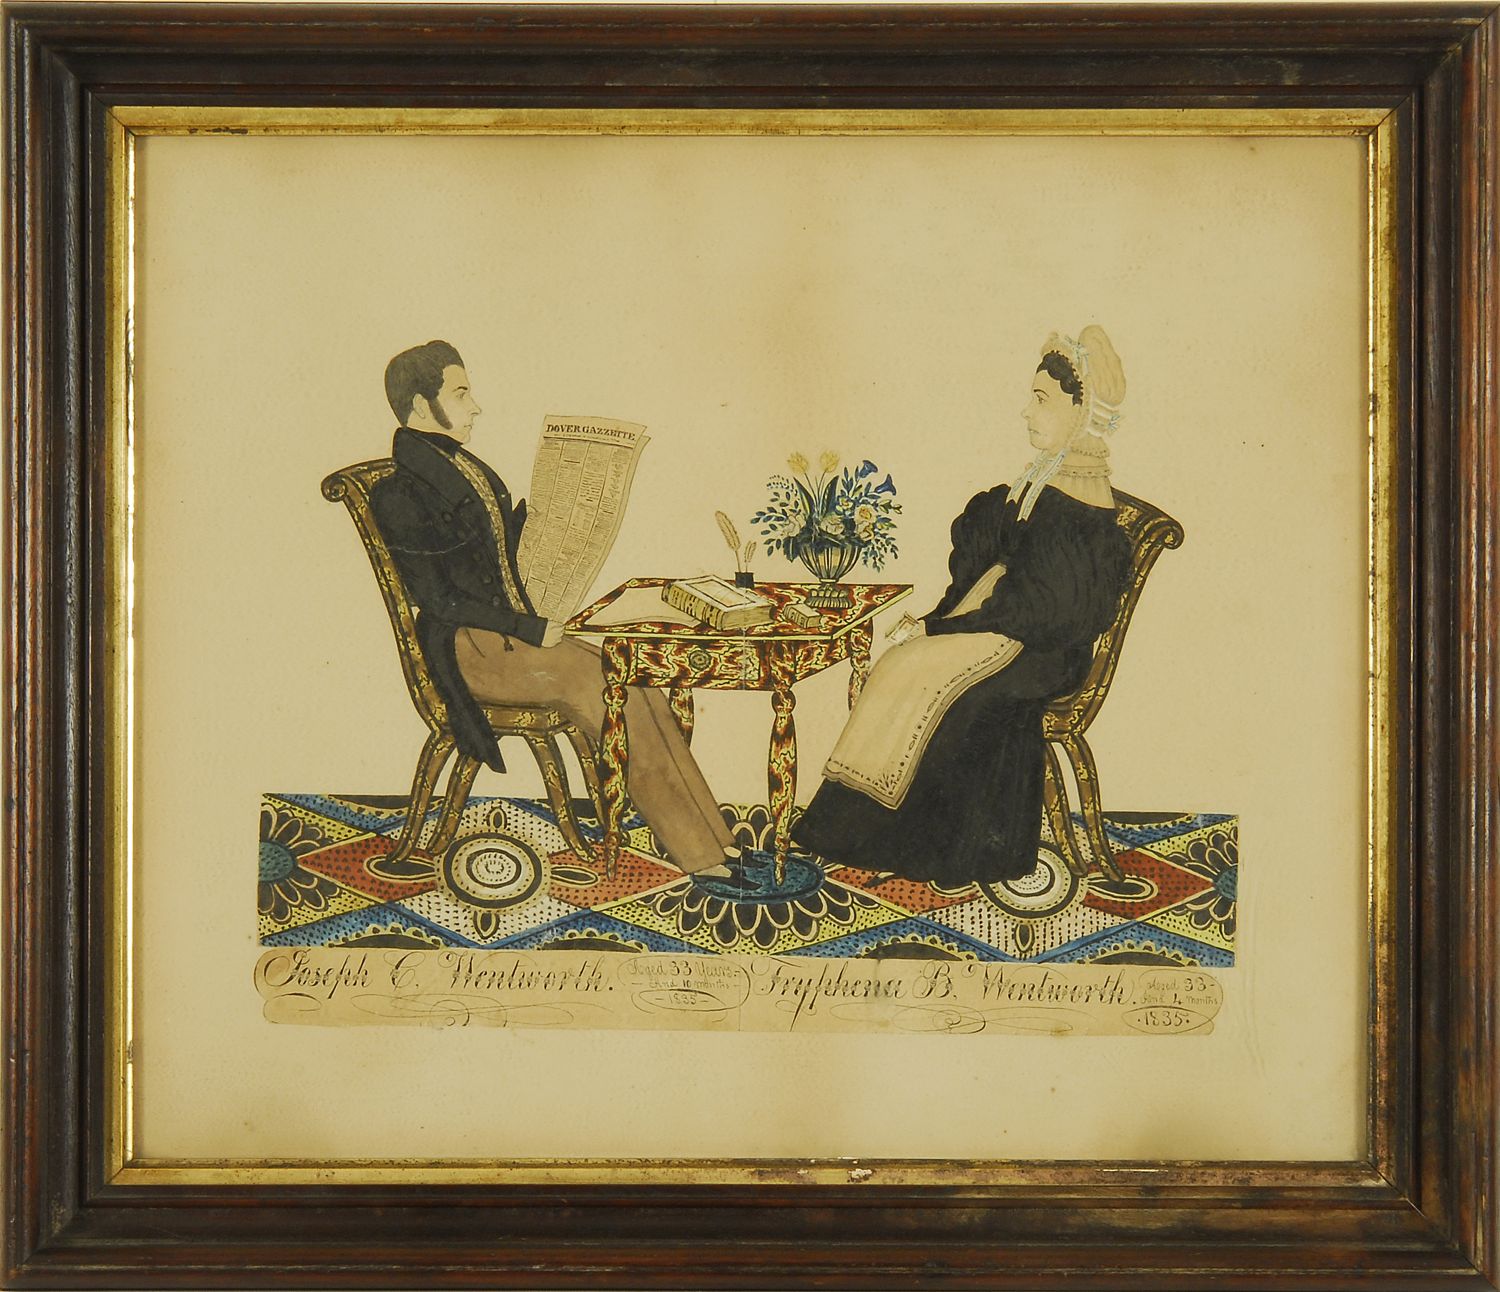 Joseph And Tryphena Wentworth by Joseph H. Davis, 1835